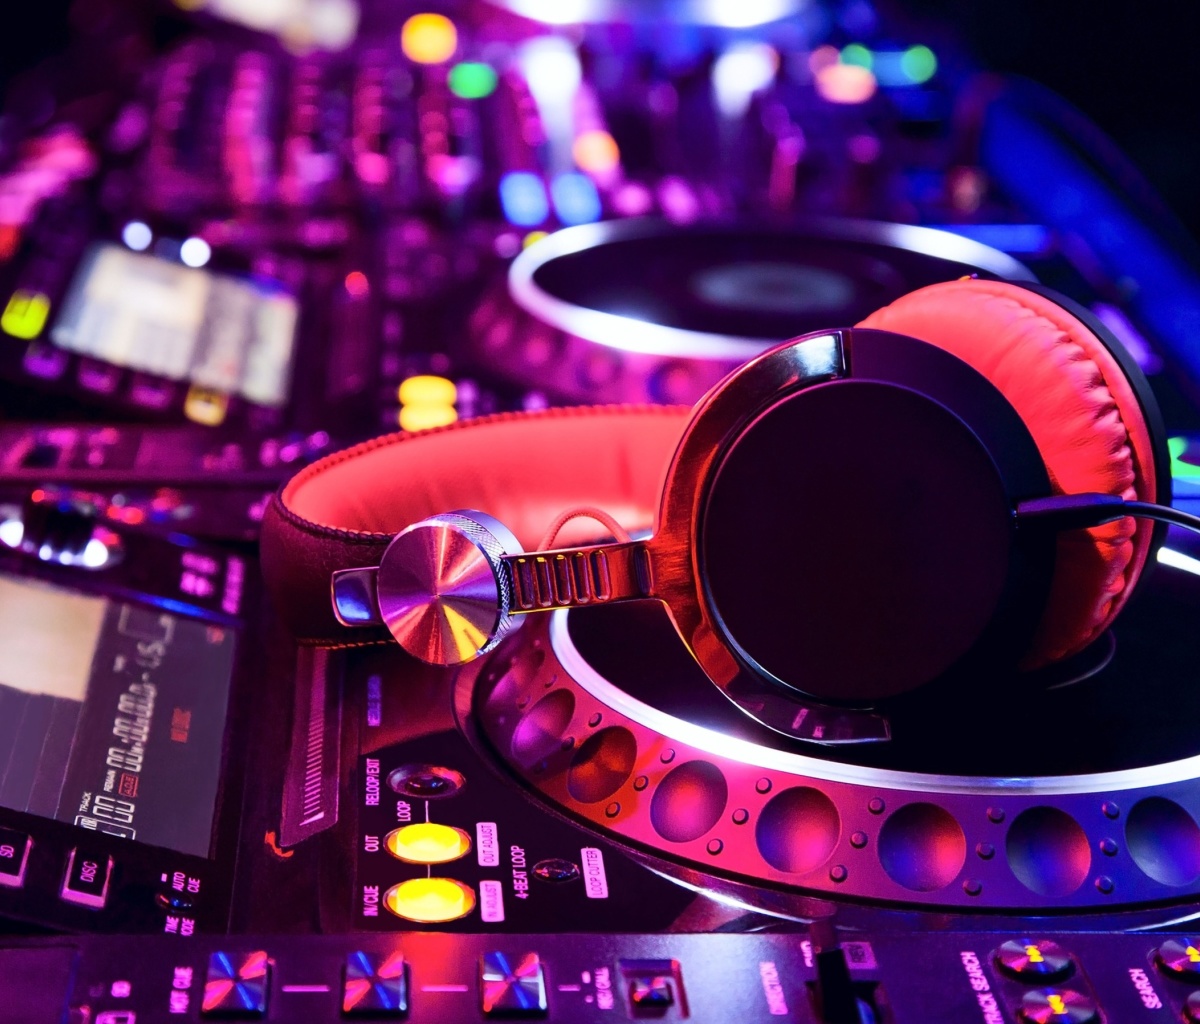 DJ Equipment in nightclub wallpaper 1200x1024